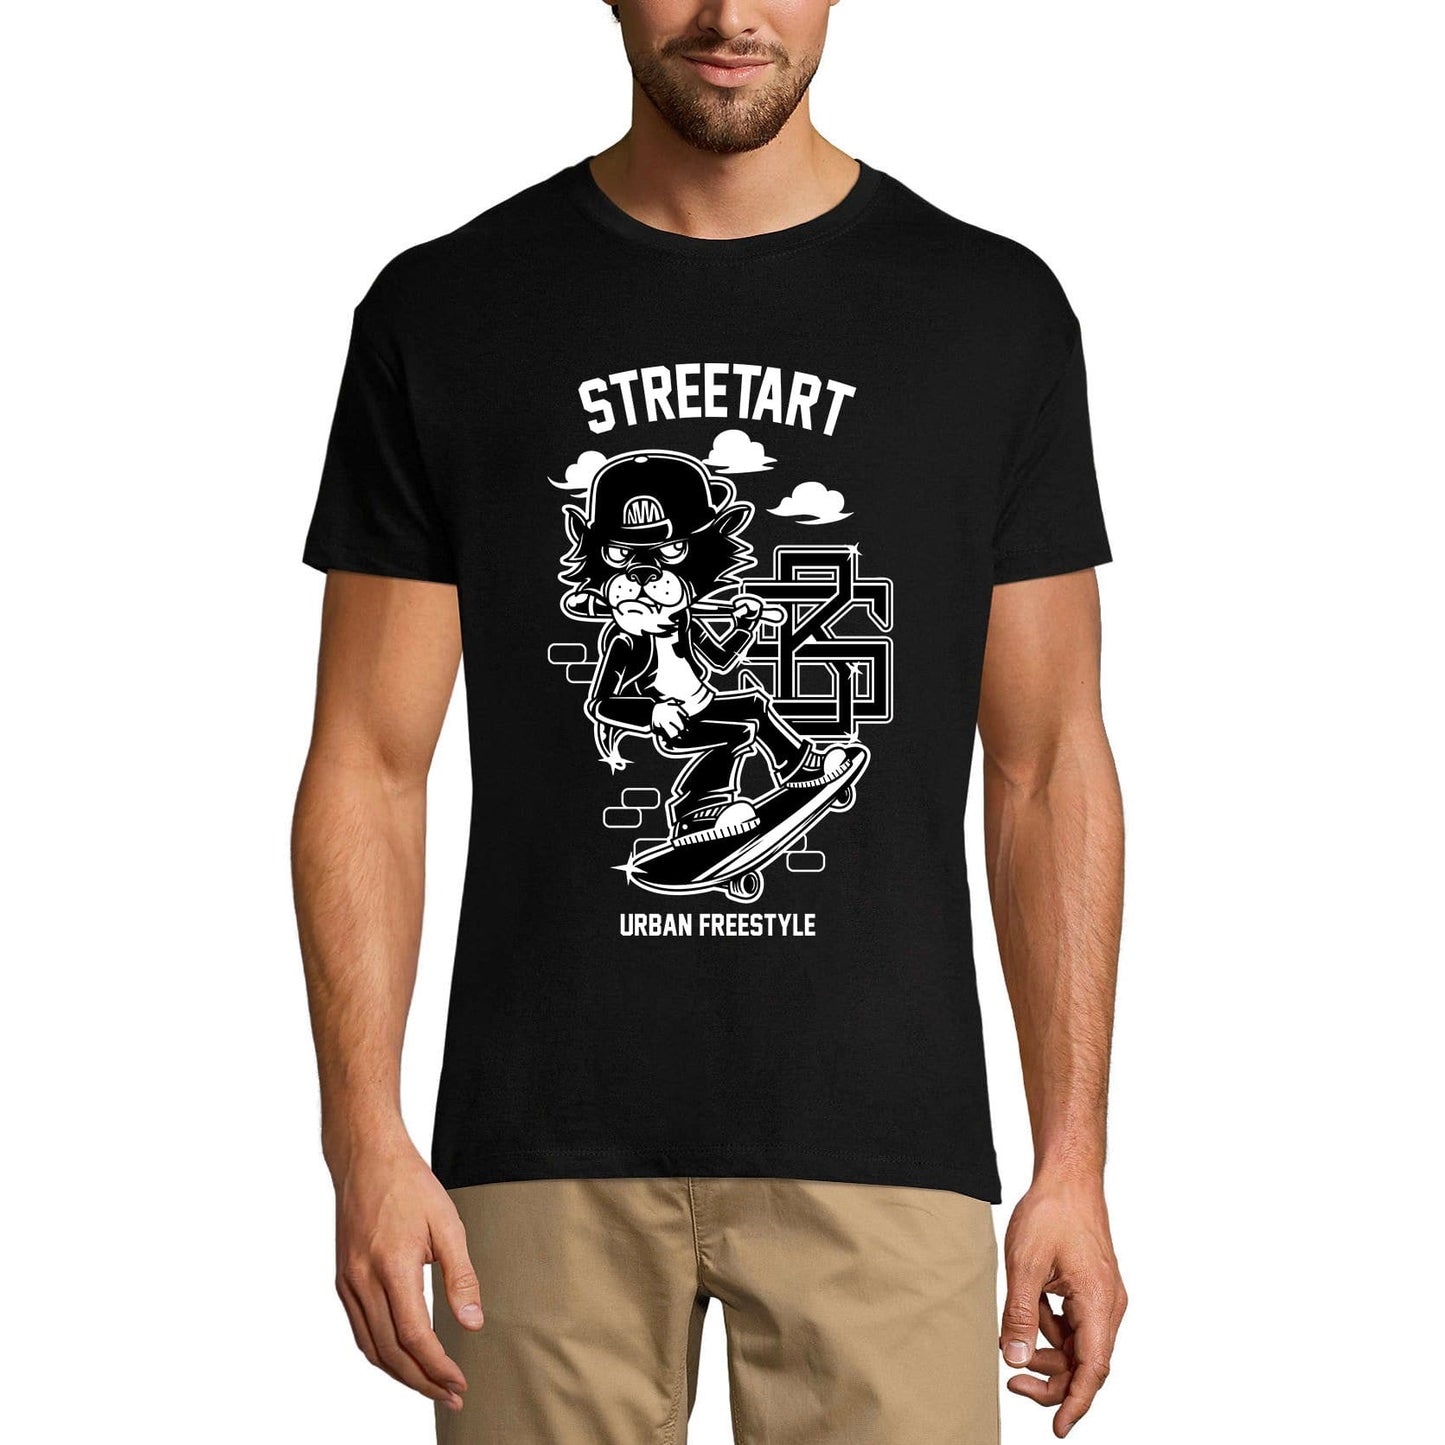 ULTRABASIC Men's Novelty T-Shirt Streetart Urban Freestyle - Funny Graphic Tee Shirt